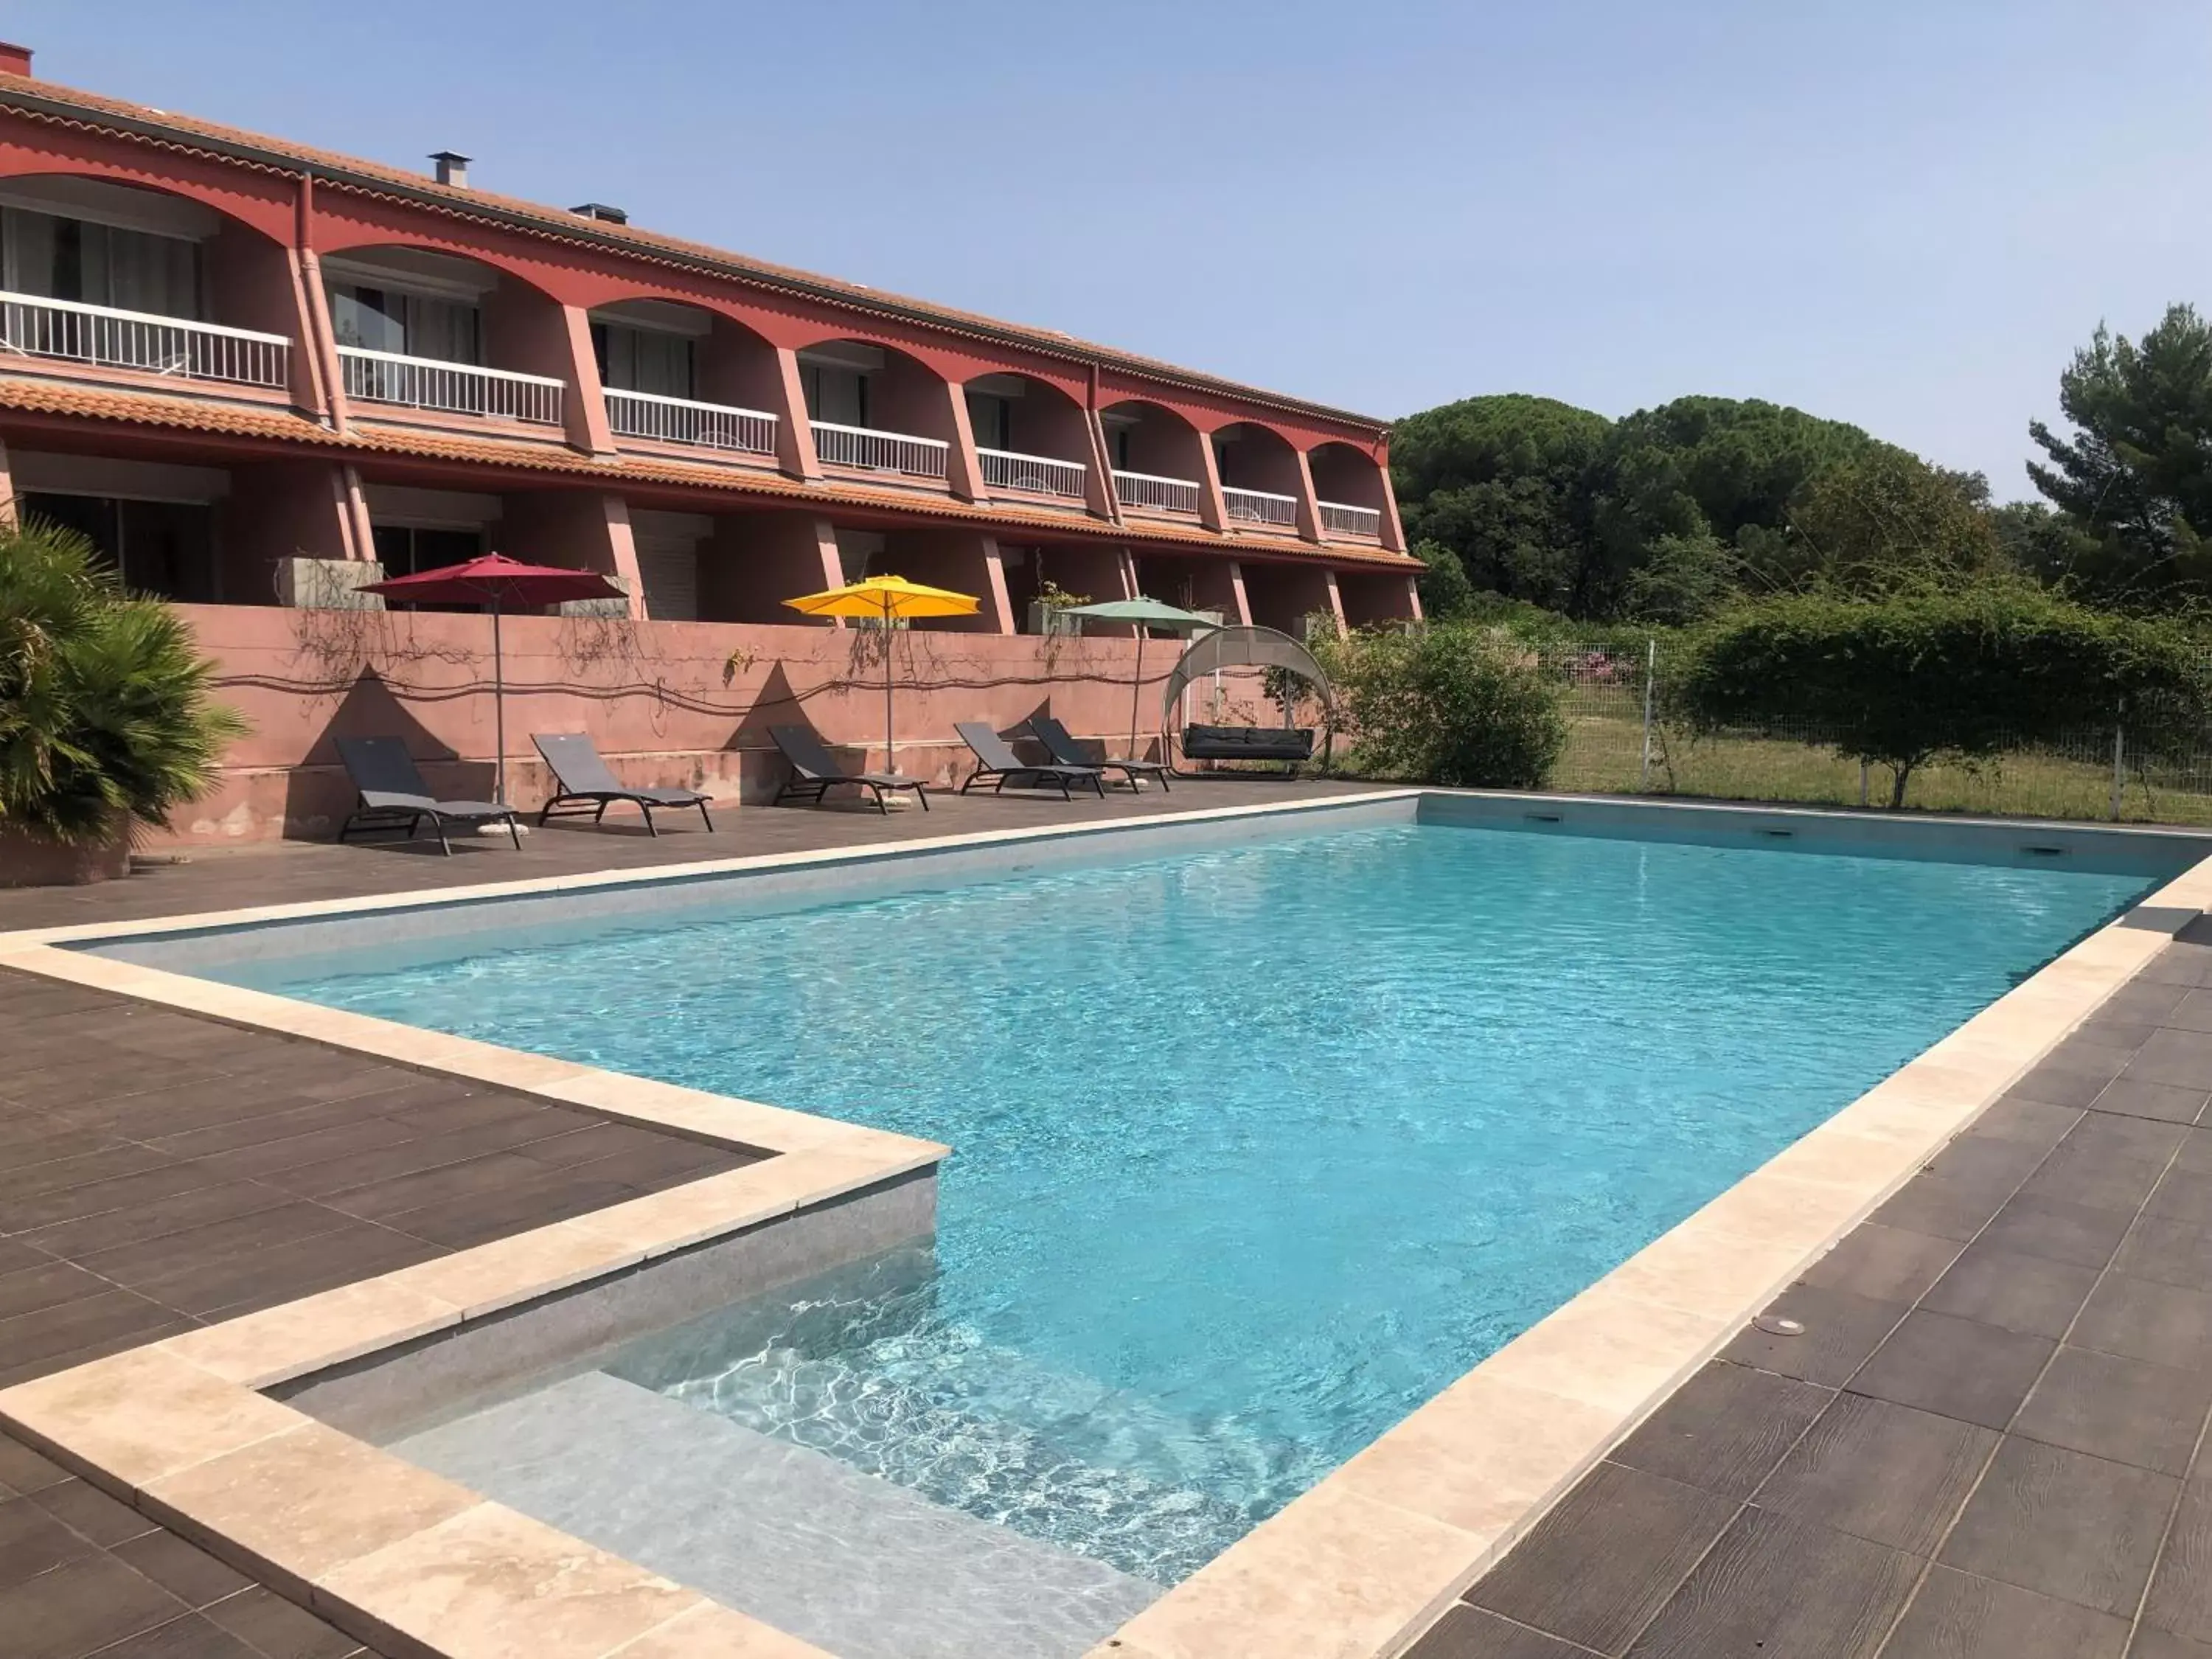 Swimming Pool in The Originals City, Le Mas de Grille, Montpellier Sud